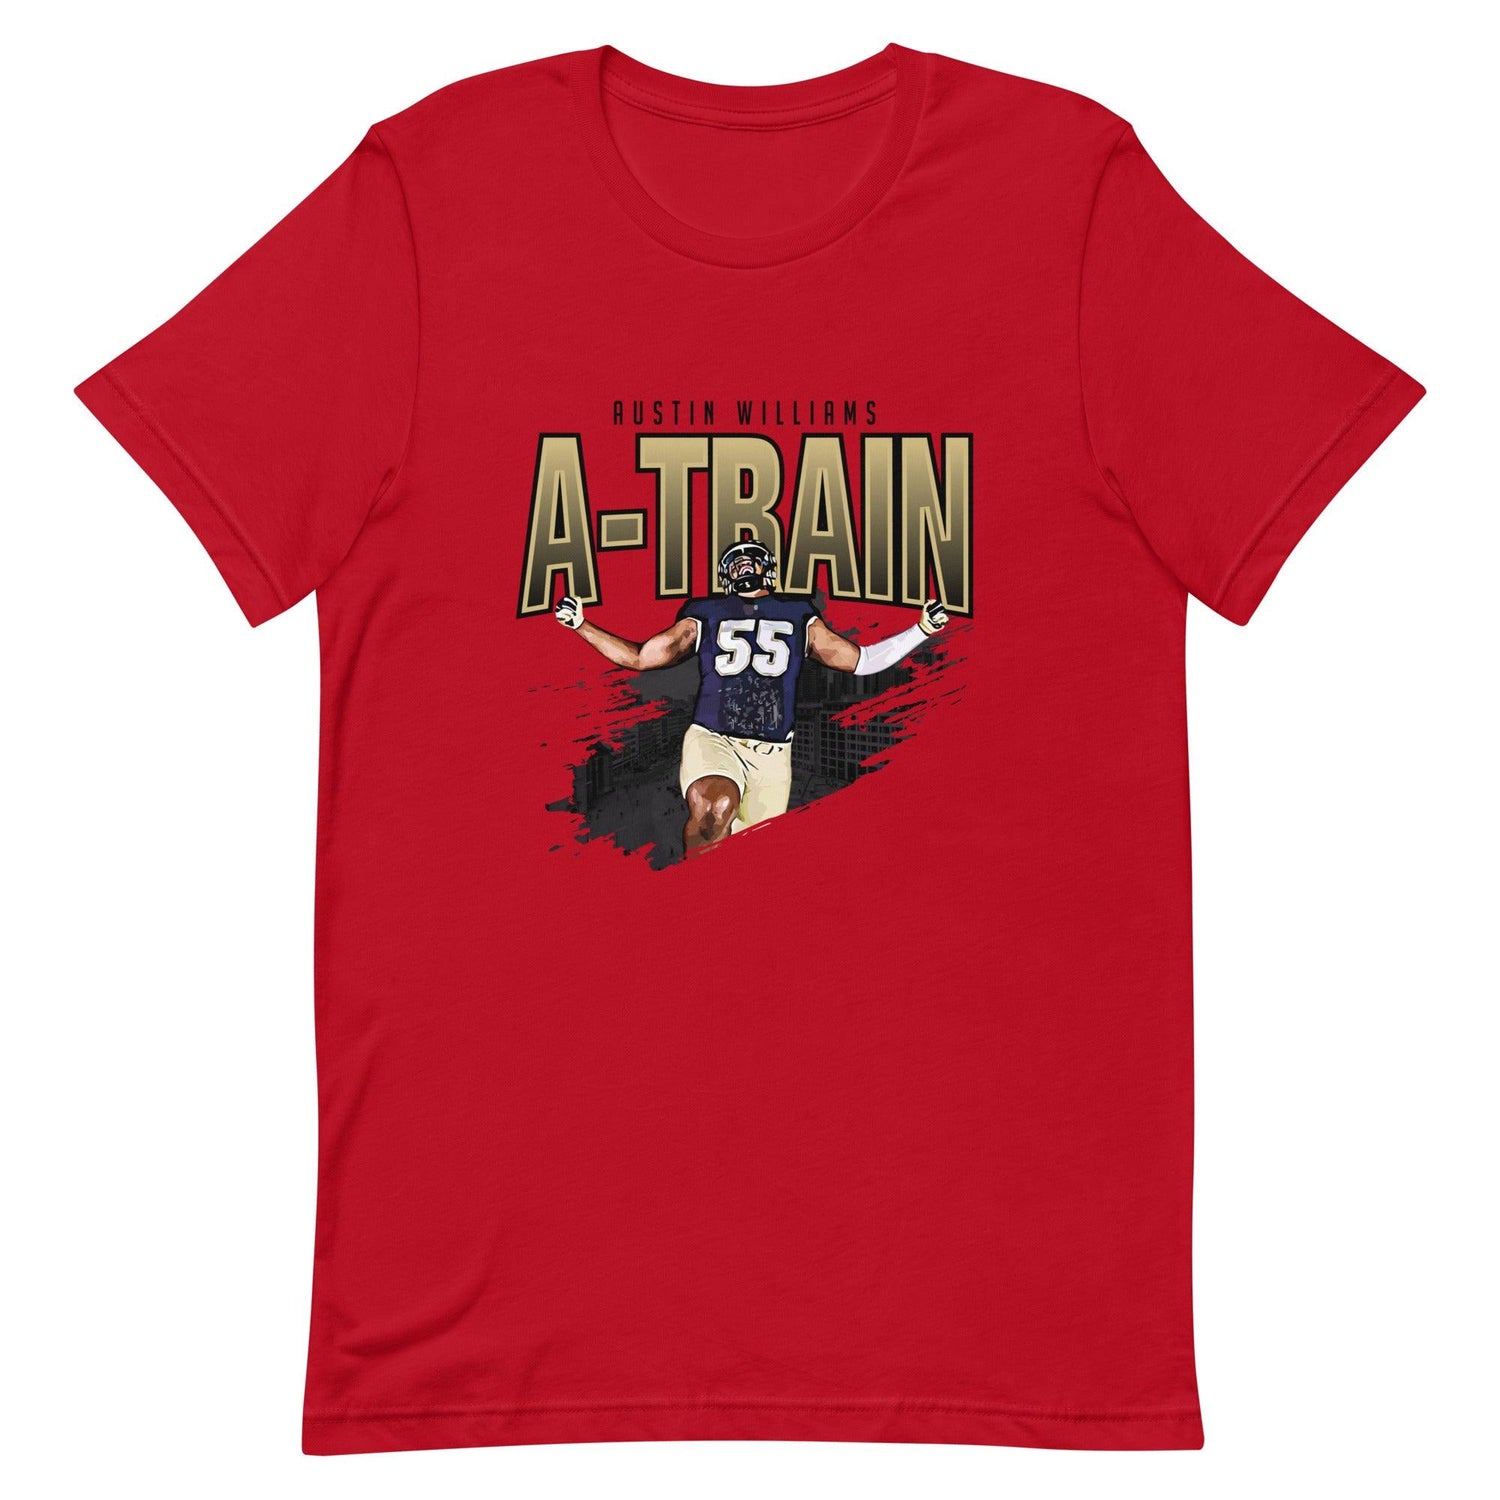 Austin Williams "Celebrate" t-shirt - Fan Arch